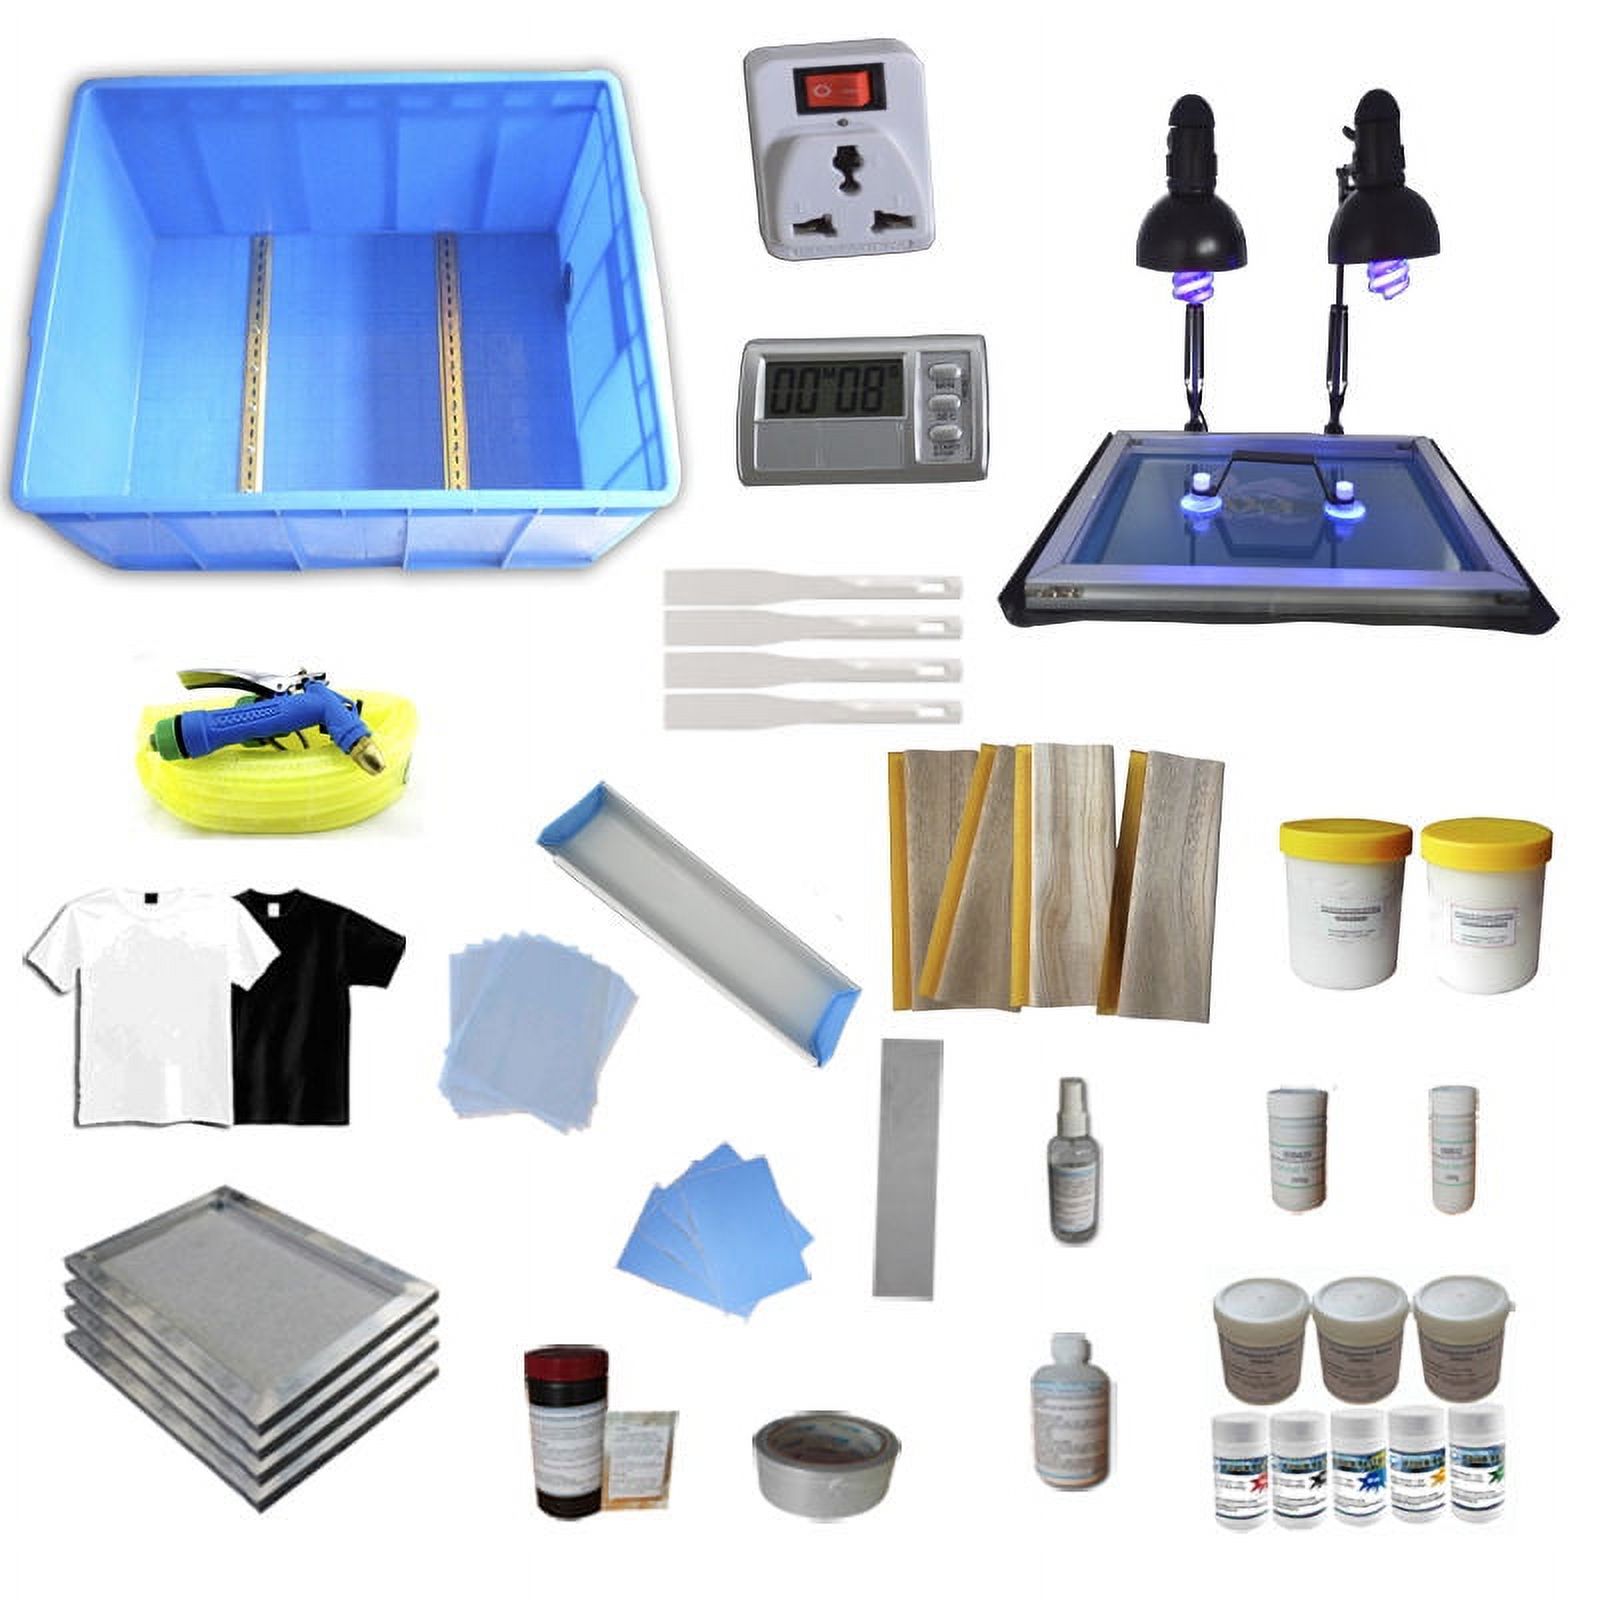 Techtongda Full 4 Color Silk Screen Printing Supply Kit Squeegee UV Exposure Unit Materials #006802 - image 1 of 6